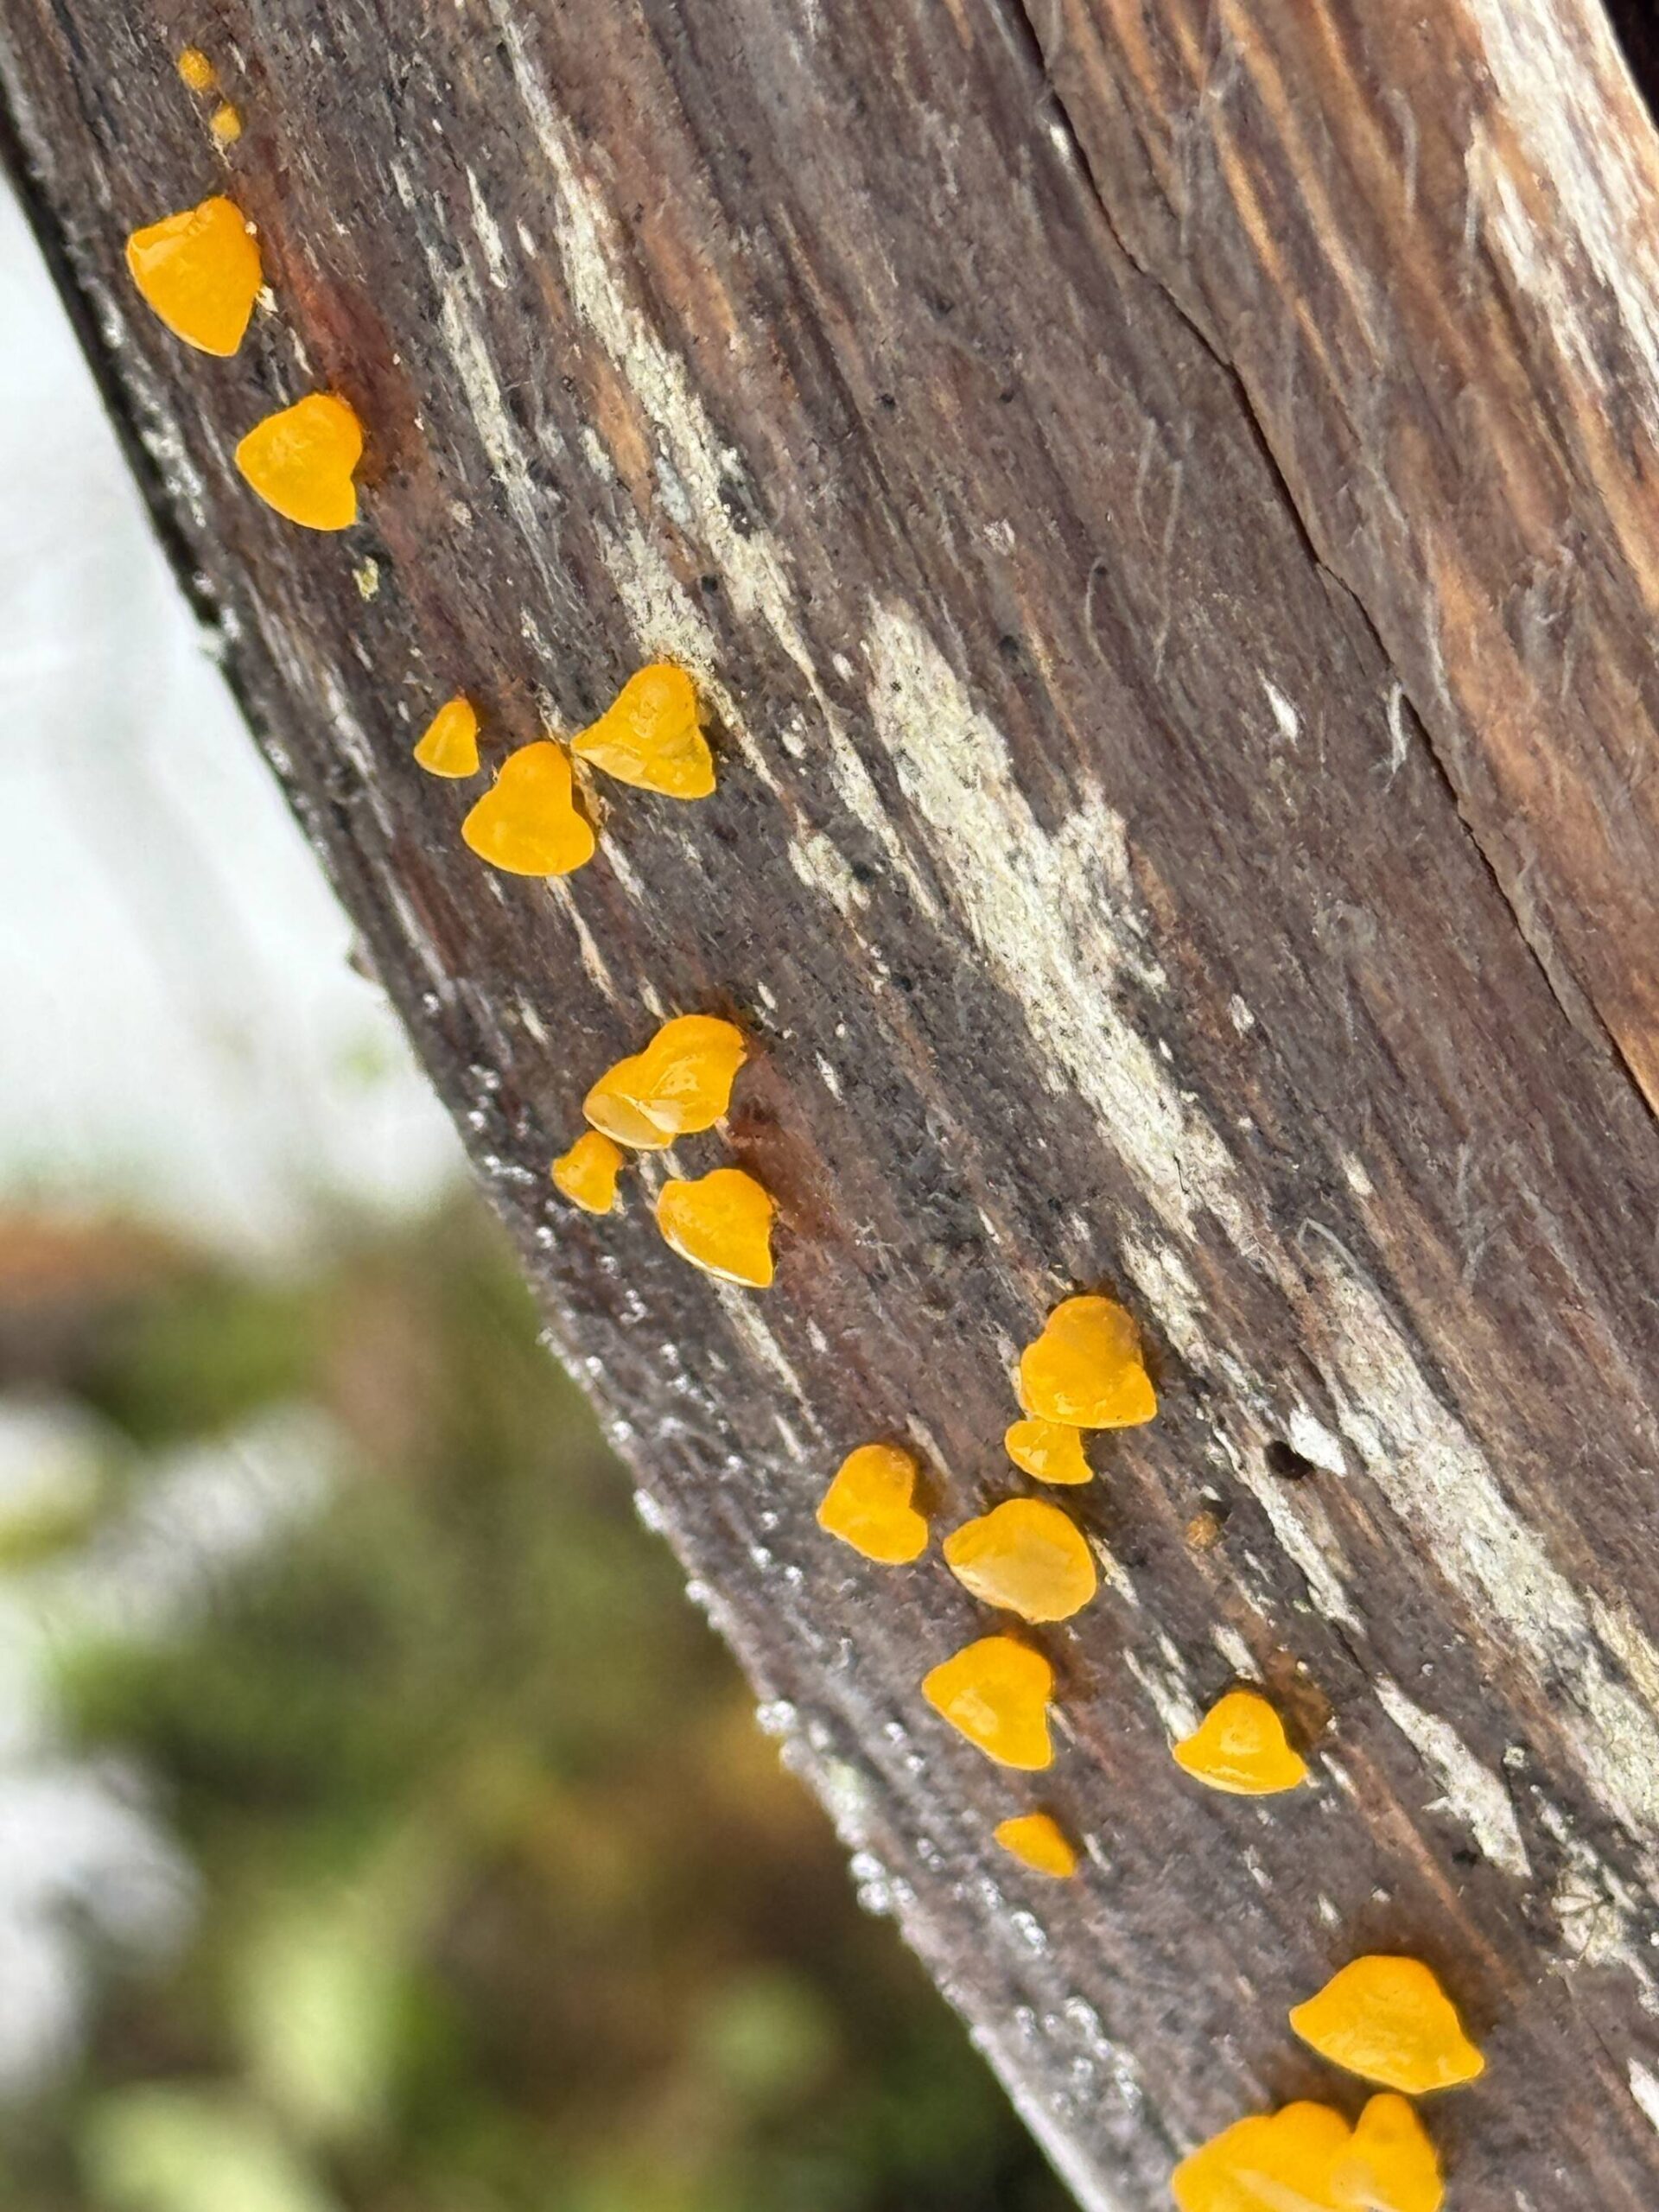 Orange jelly fungi in Gastineau Meadows on Nov. 25. (Photo by Deana Barajas)